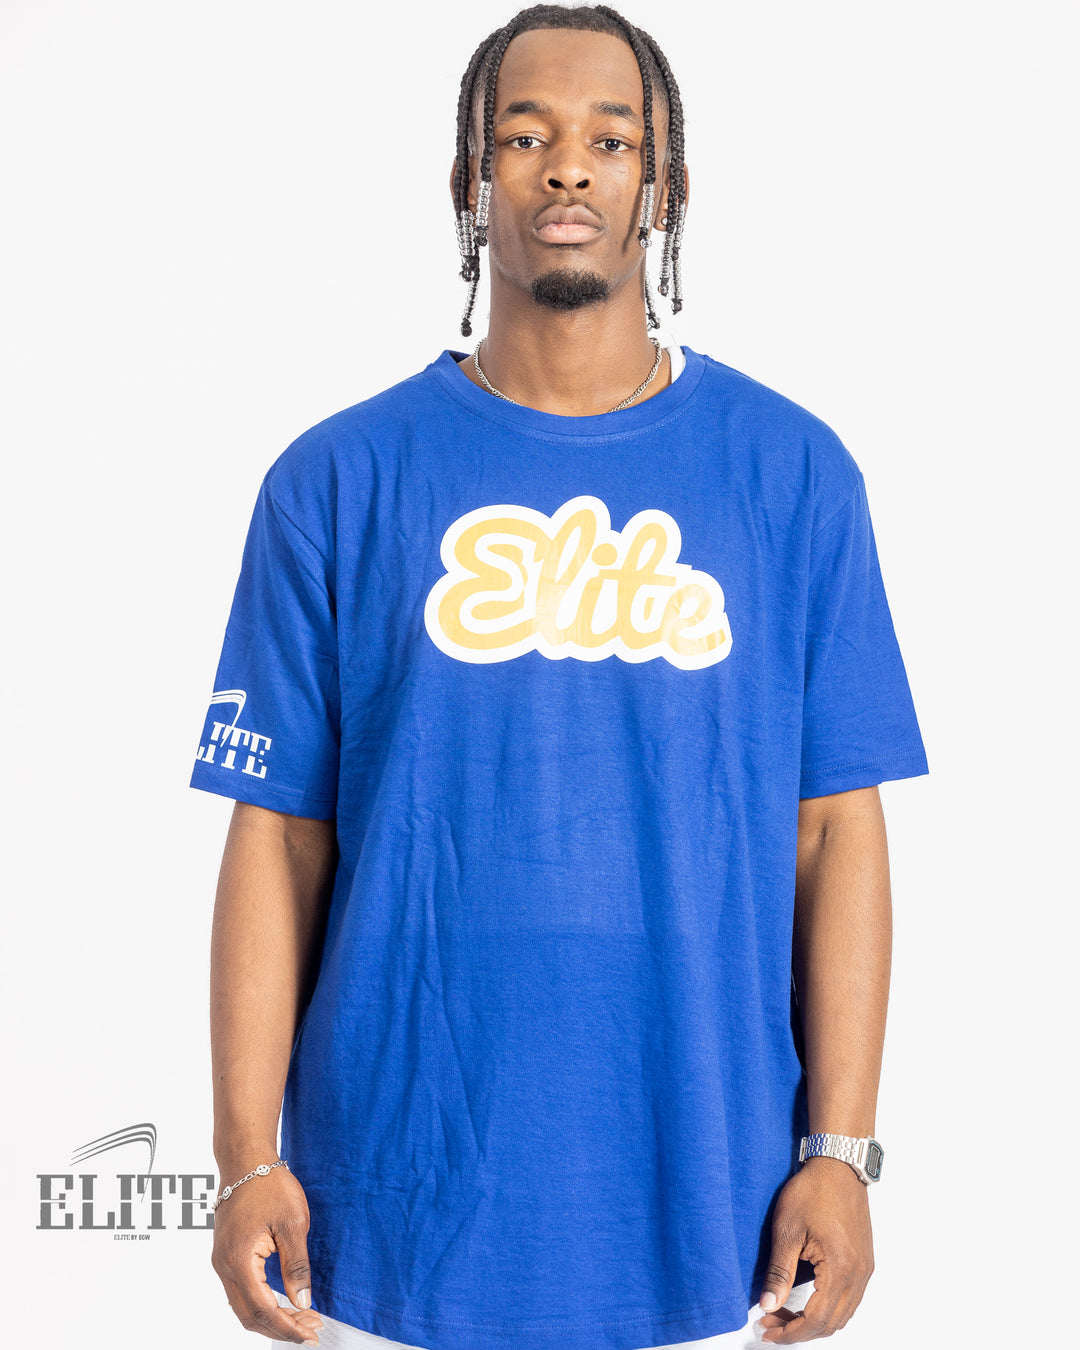 Elite - Shirt - Blue/Gold